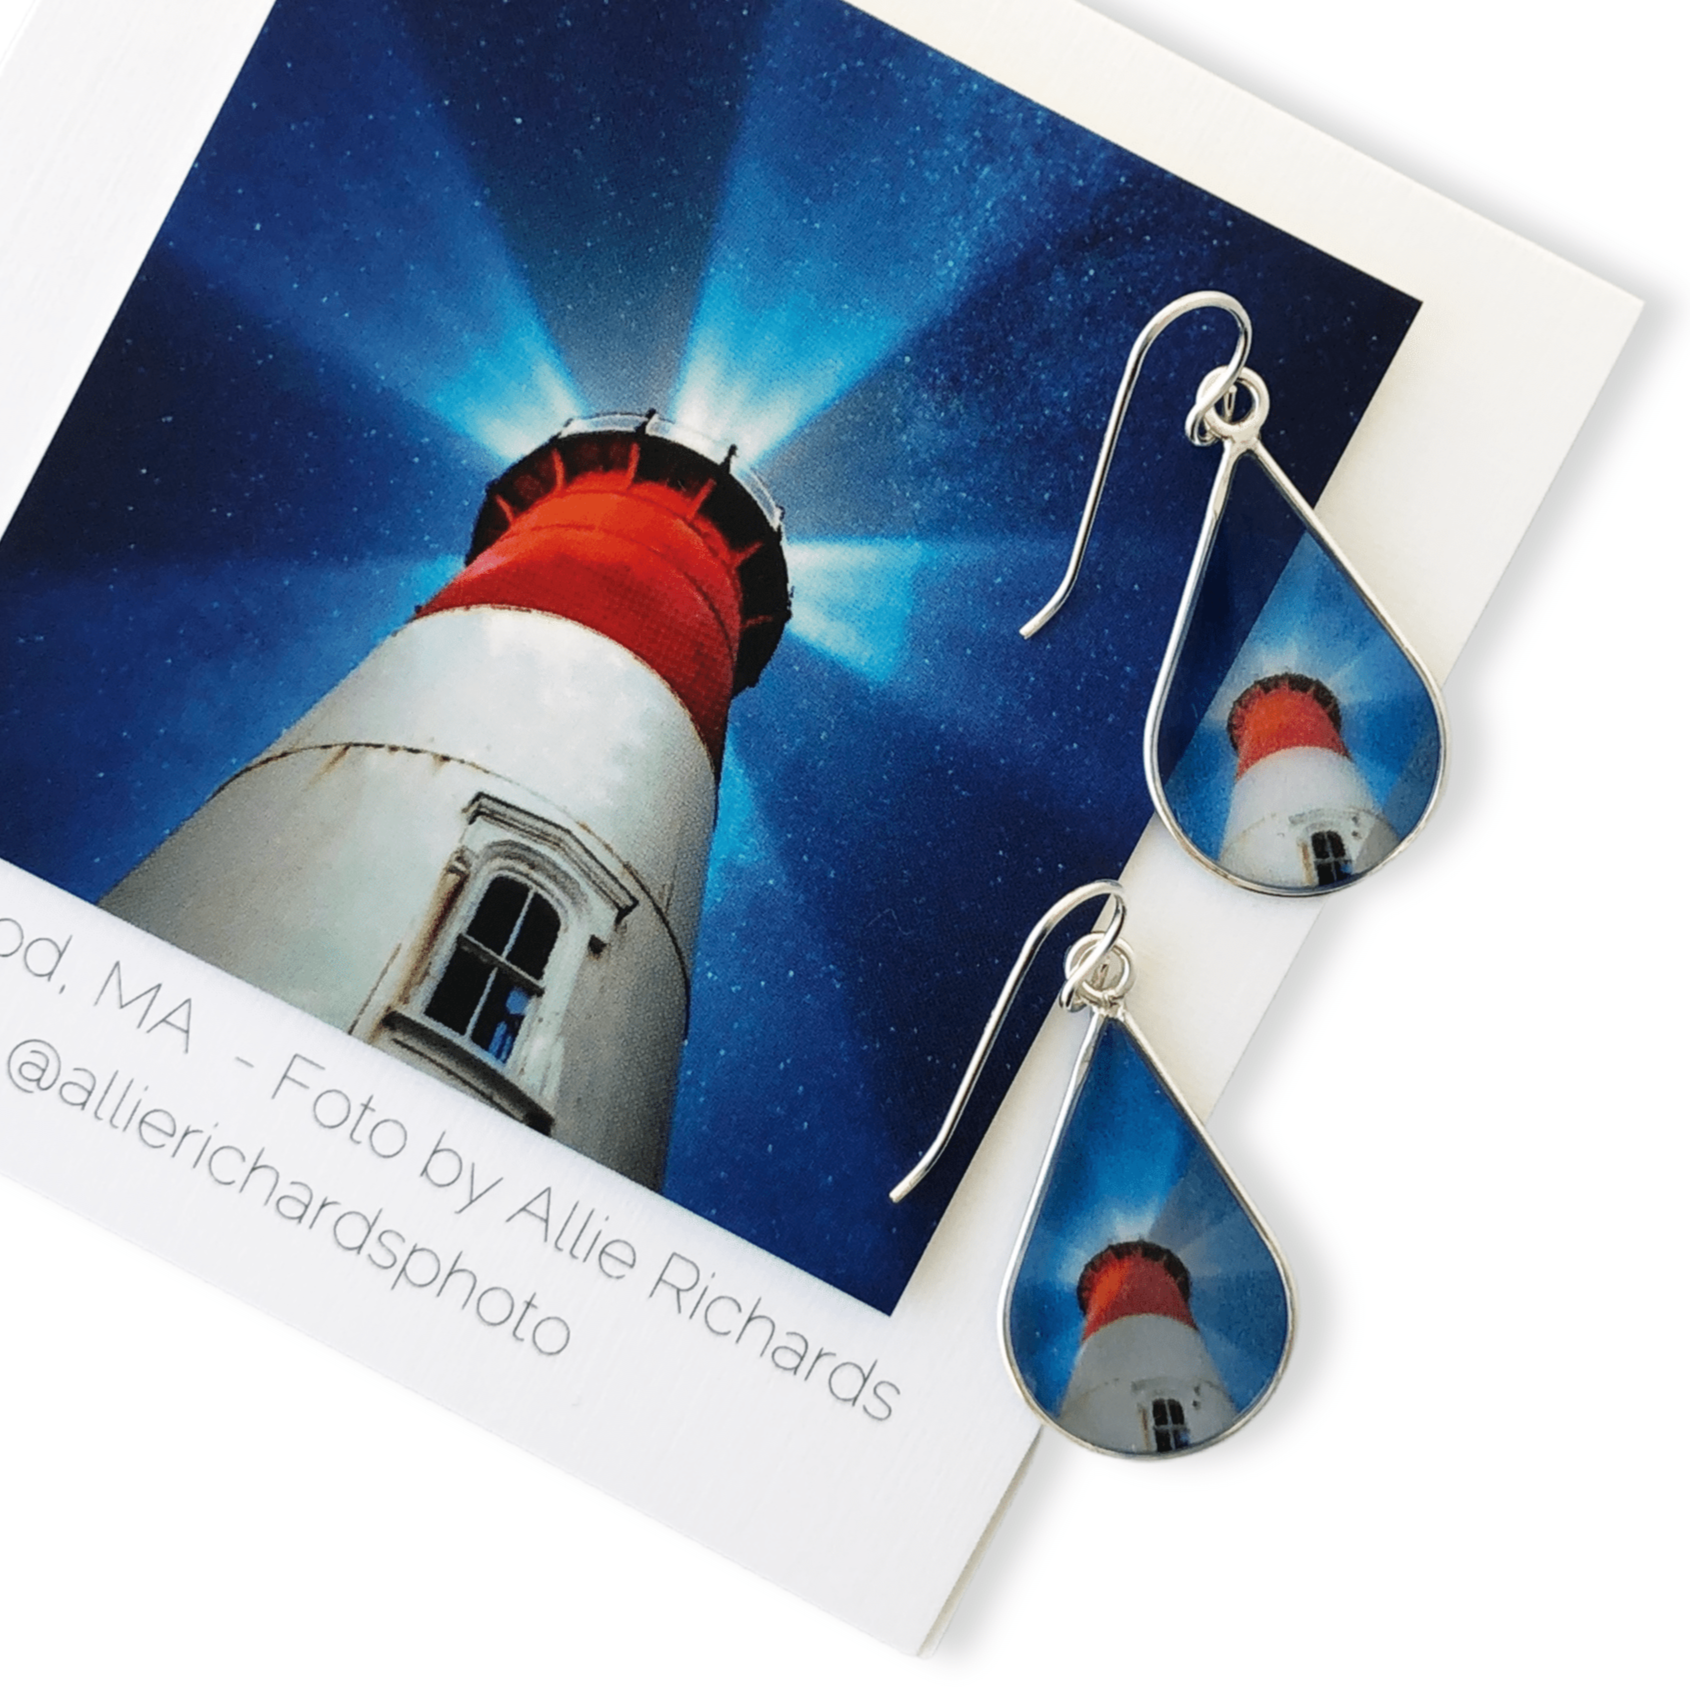 Cape Cod Lighthouse Earrings by Allie Richards